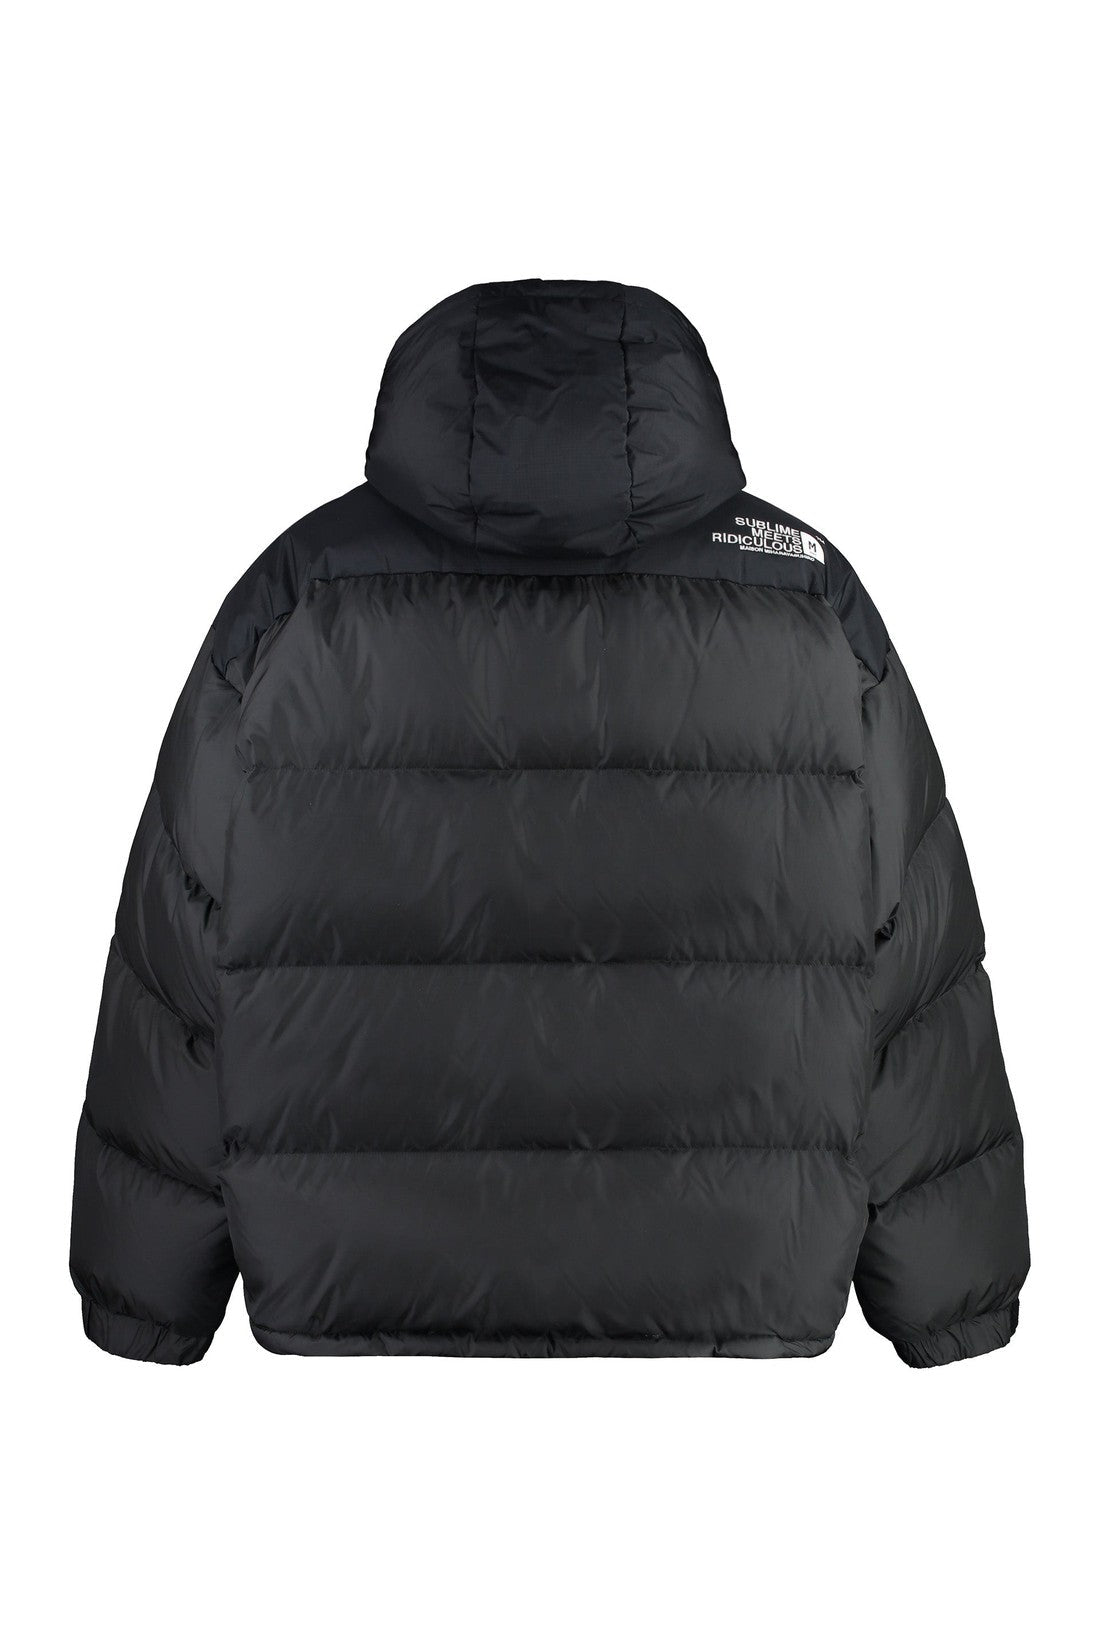 Maison Mihara Yasuhiro-OUTLET-SALE-Oversize hooded down jacket-ARCHIVIST